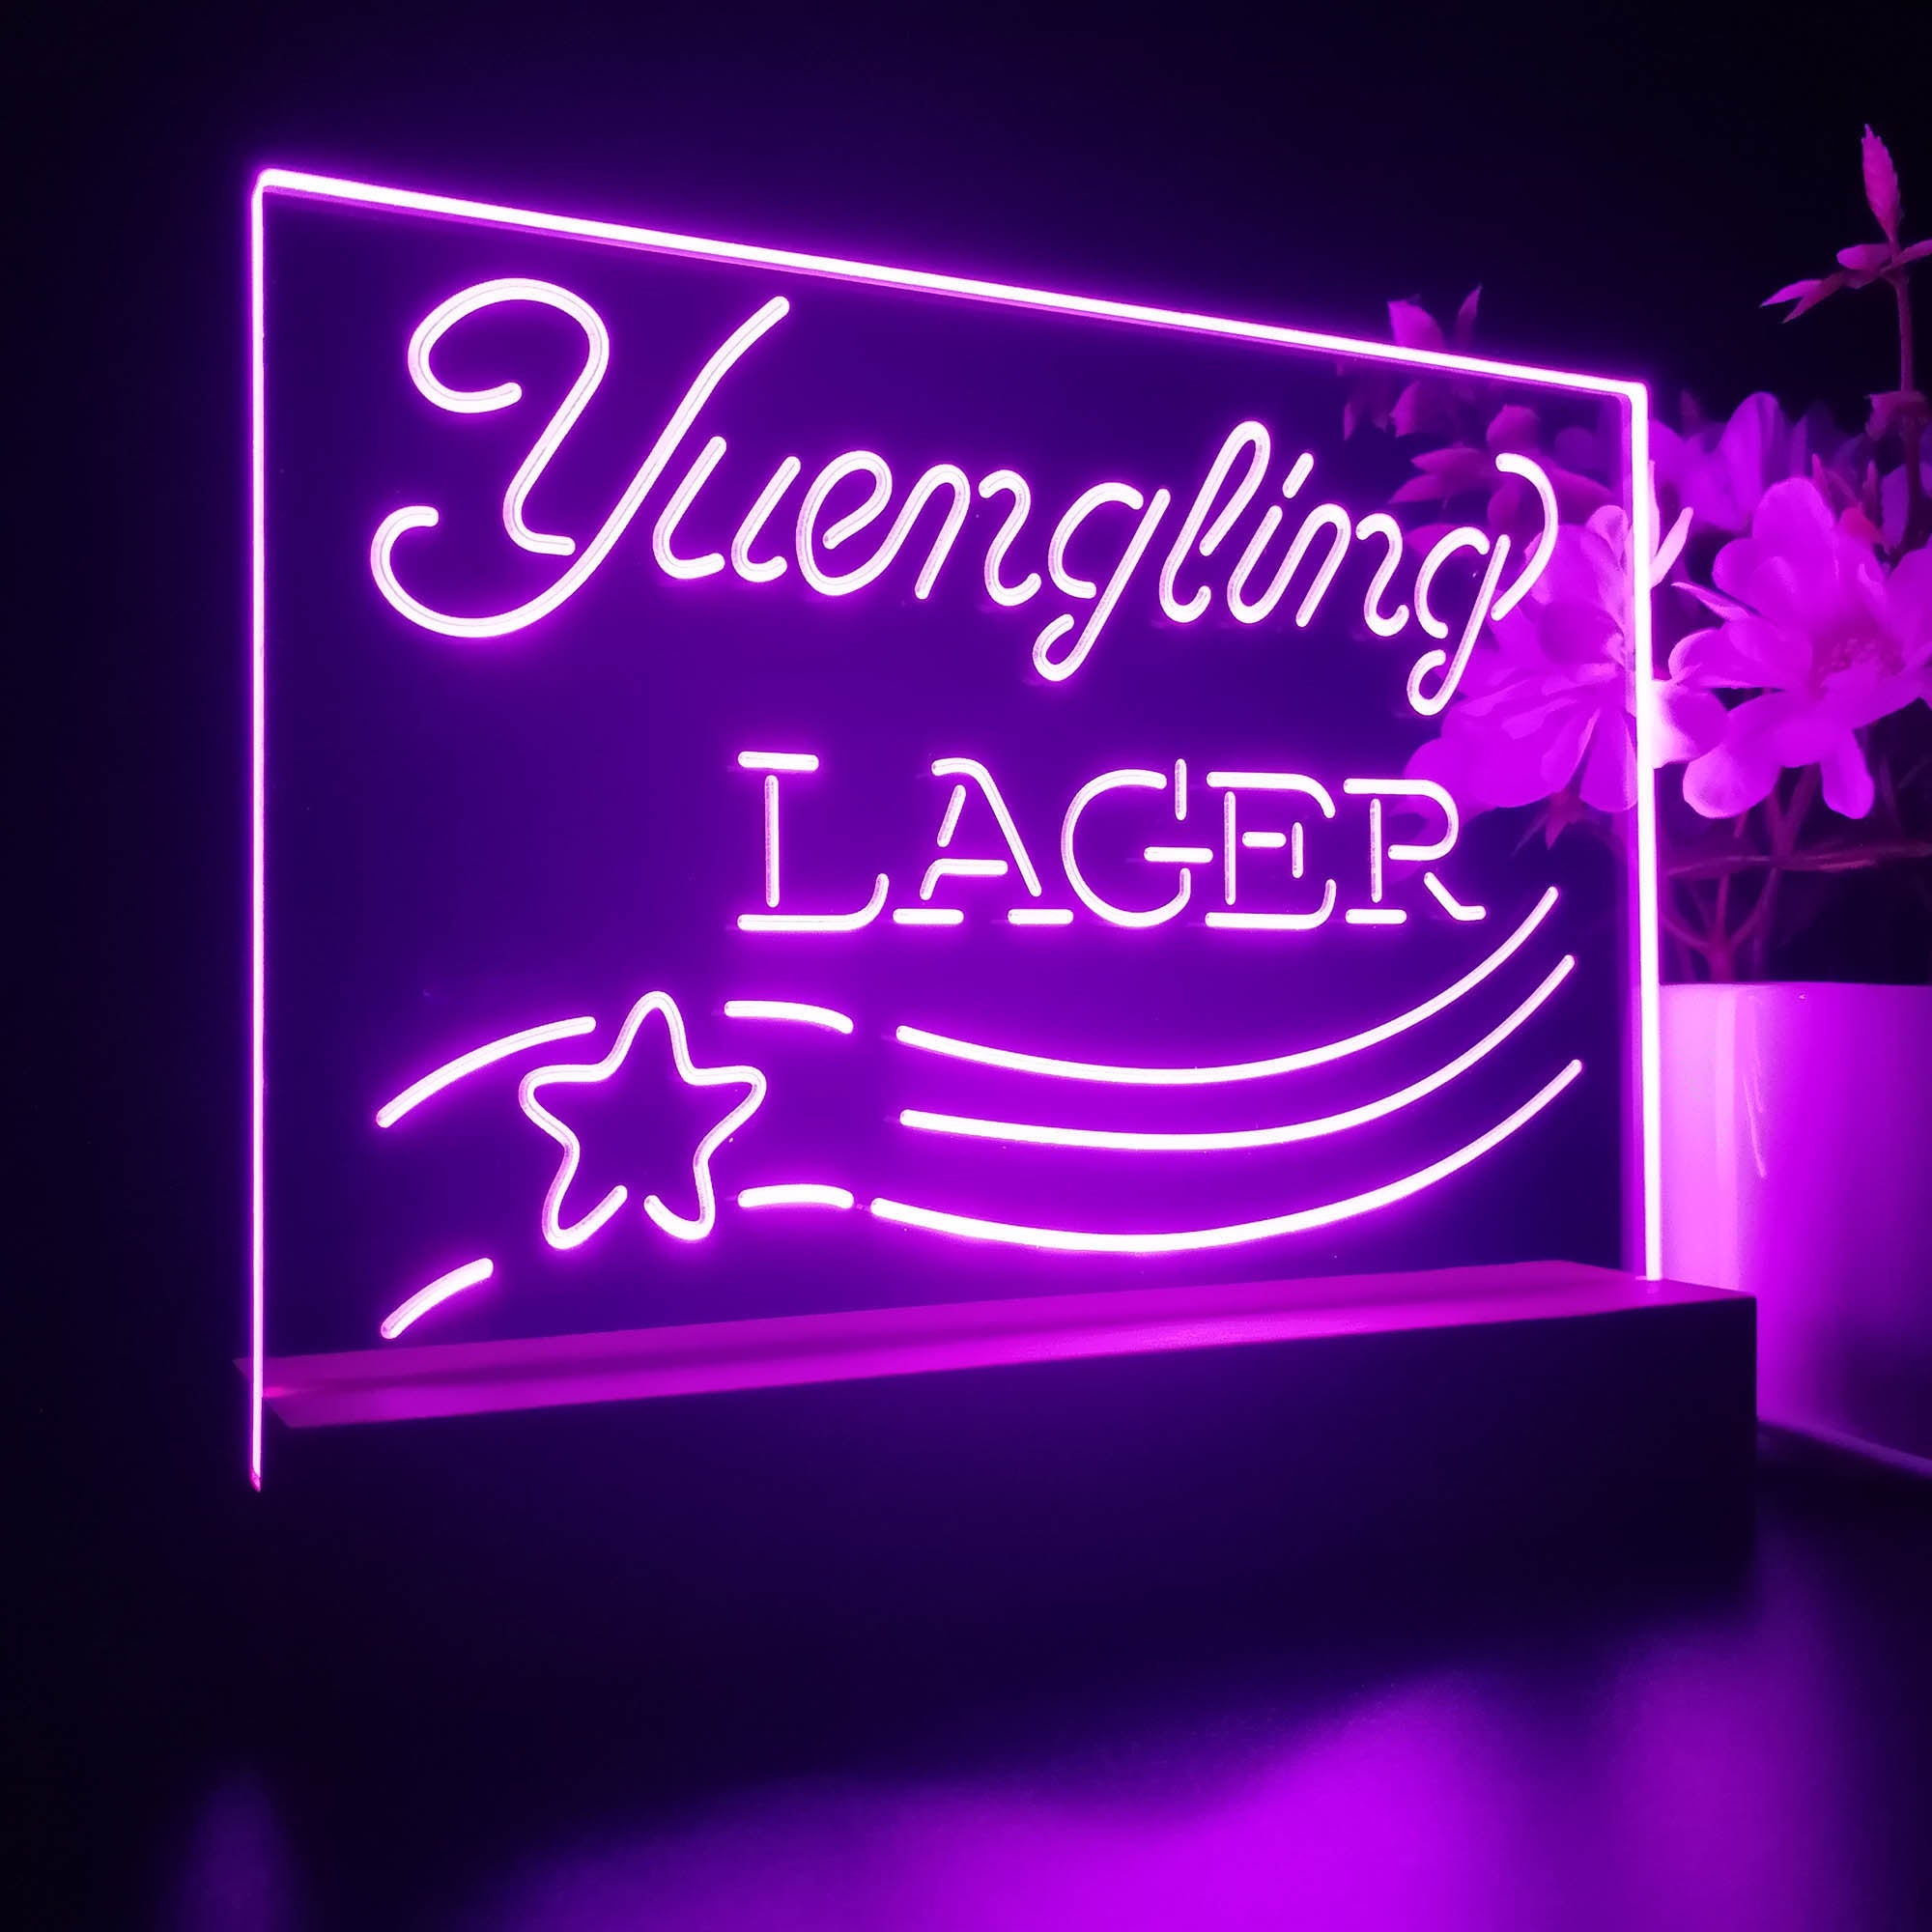 Yuengling Beer Larger Bar Neon Sign Pub Bar Lamp